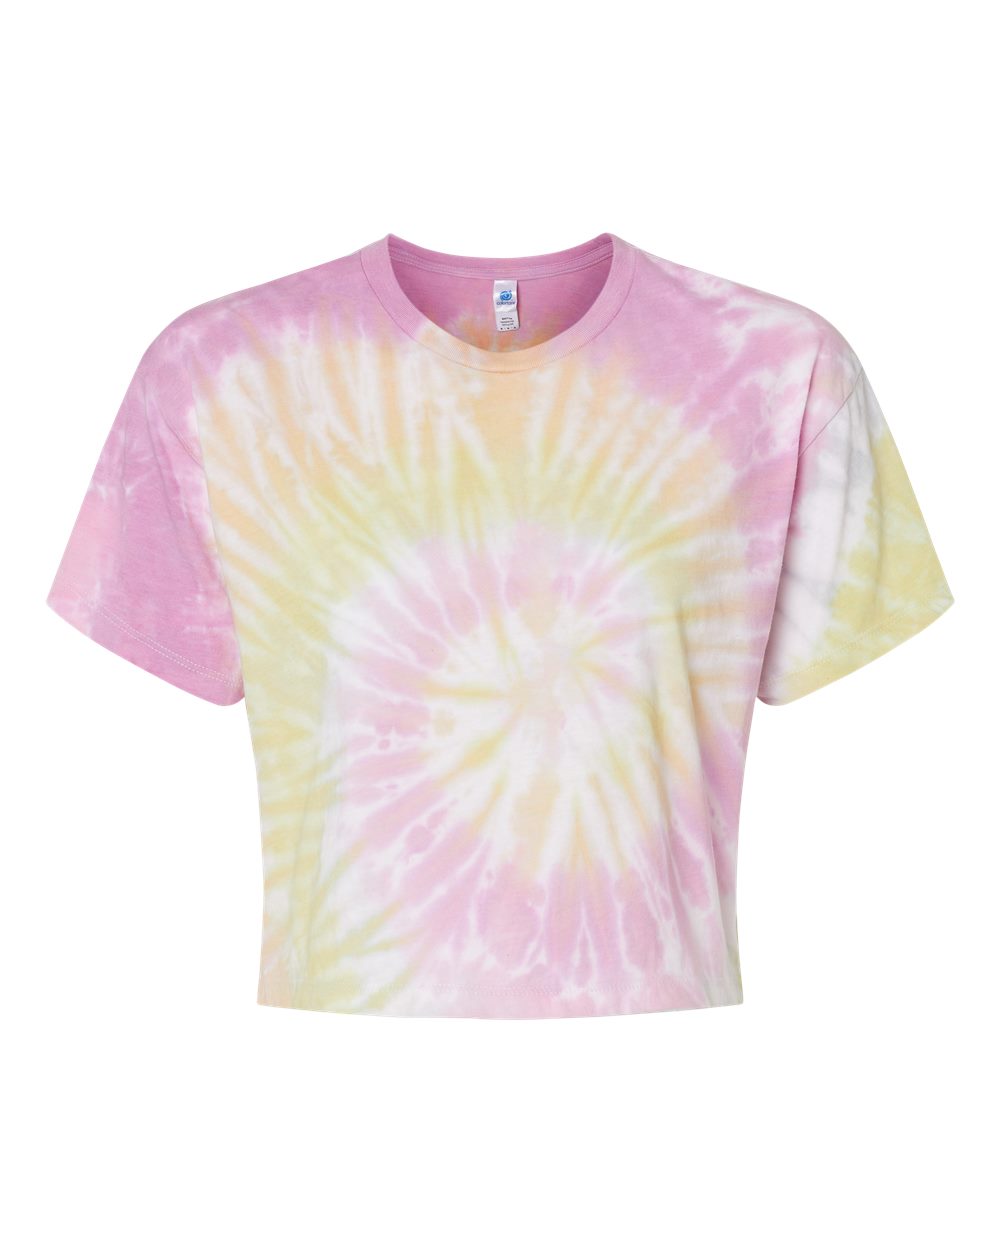 Women's Tie-Dyed Crop T-Shirt - 1050